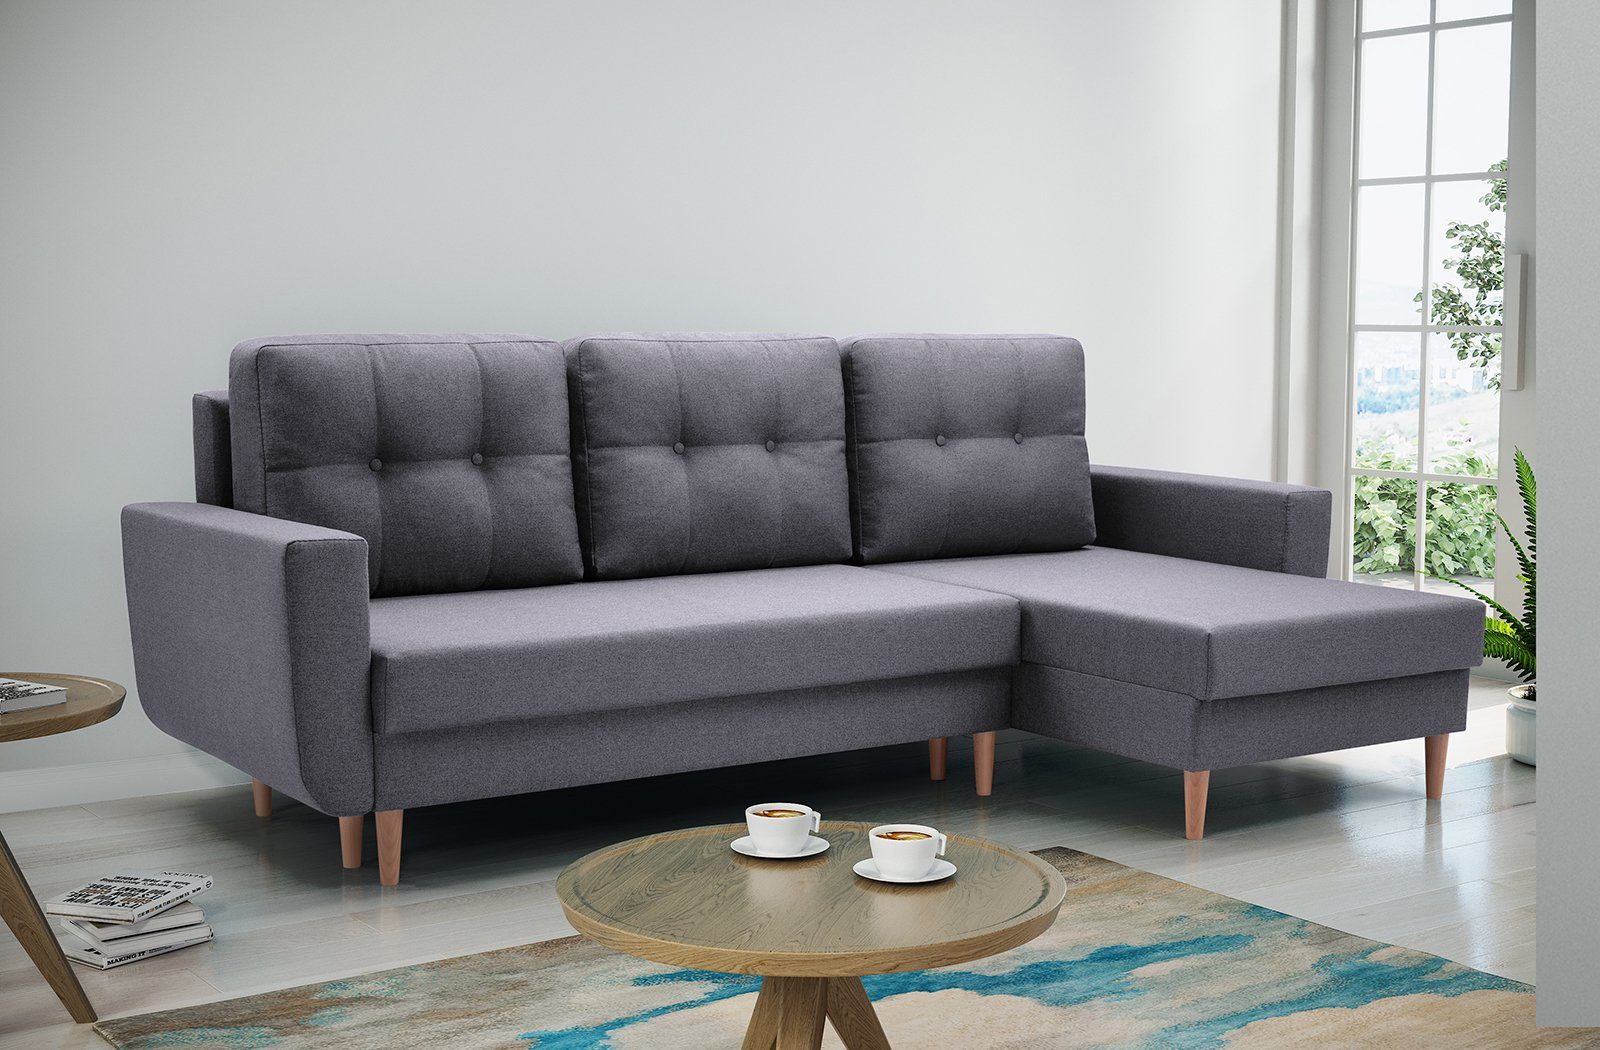 Beautysofa Polsterecke Couch Sofa Ecksofa ONLY, mit Schlaffunktion, mit universelle mane Anthrazit (malmo new 96)